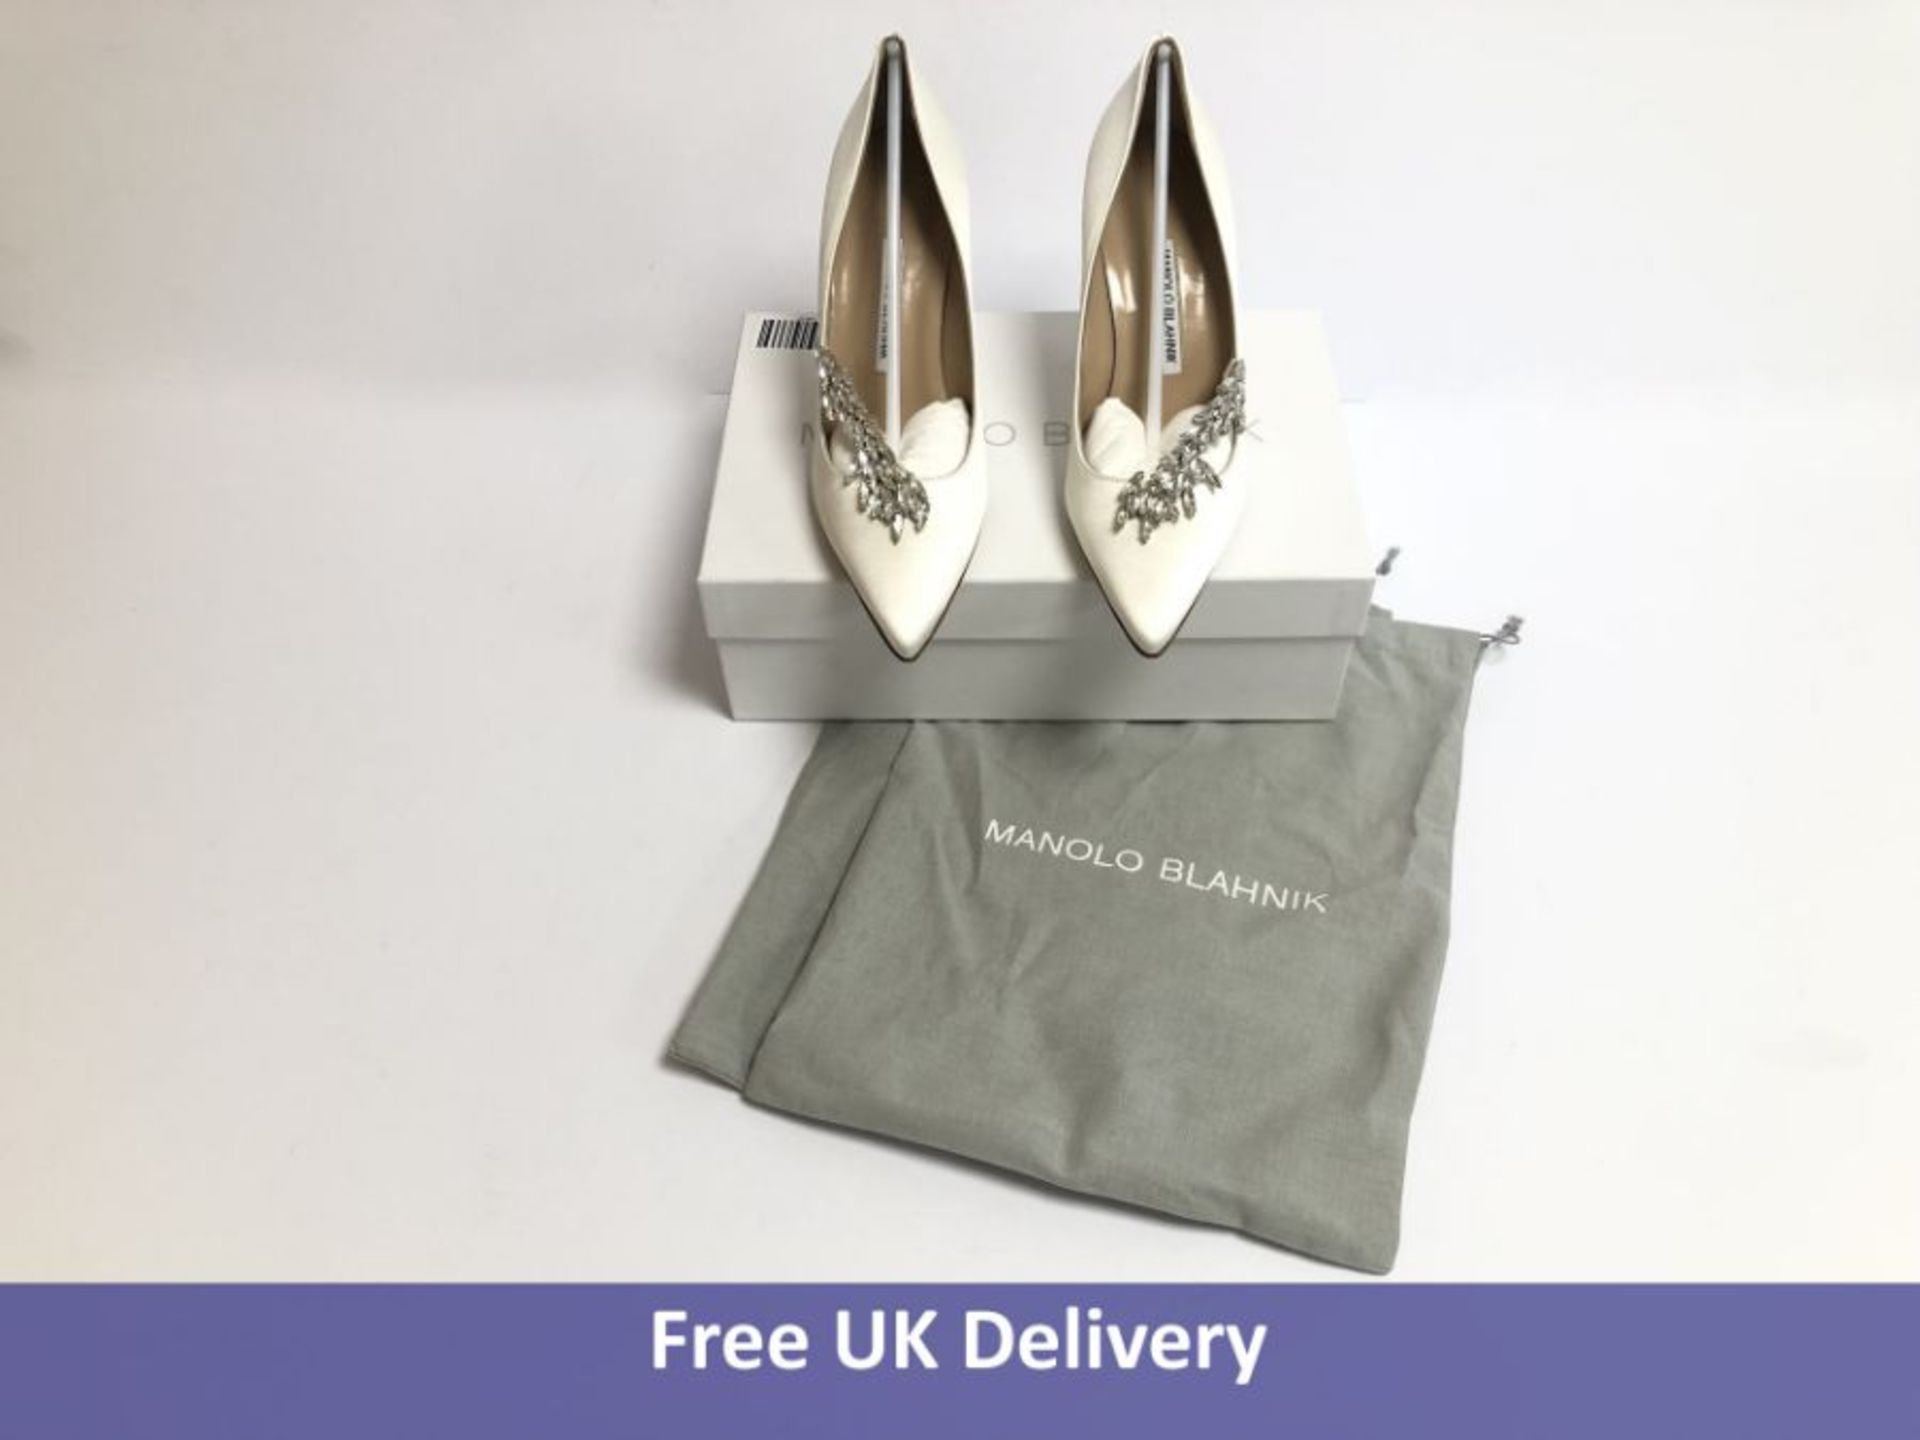 Manolo Blahnik Women's Shoes, Nadria White Satin with Jewel Buckle, UK 6.5